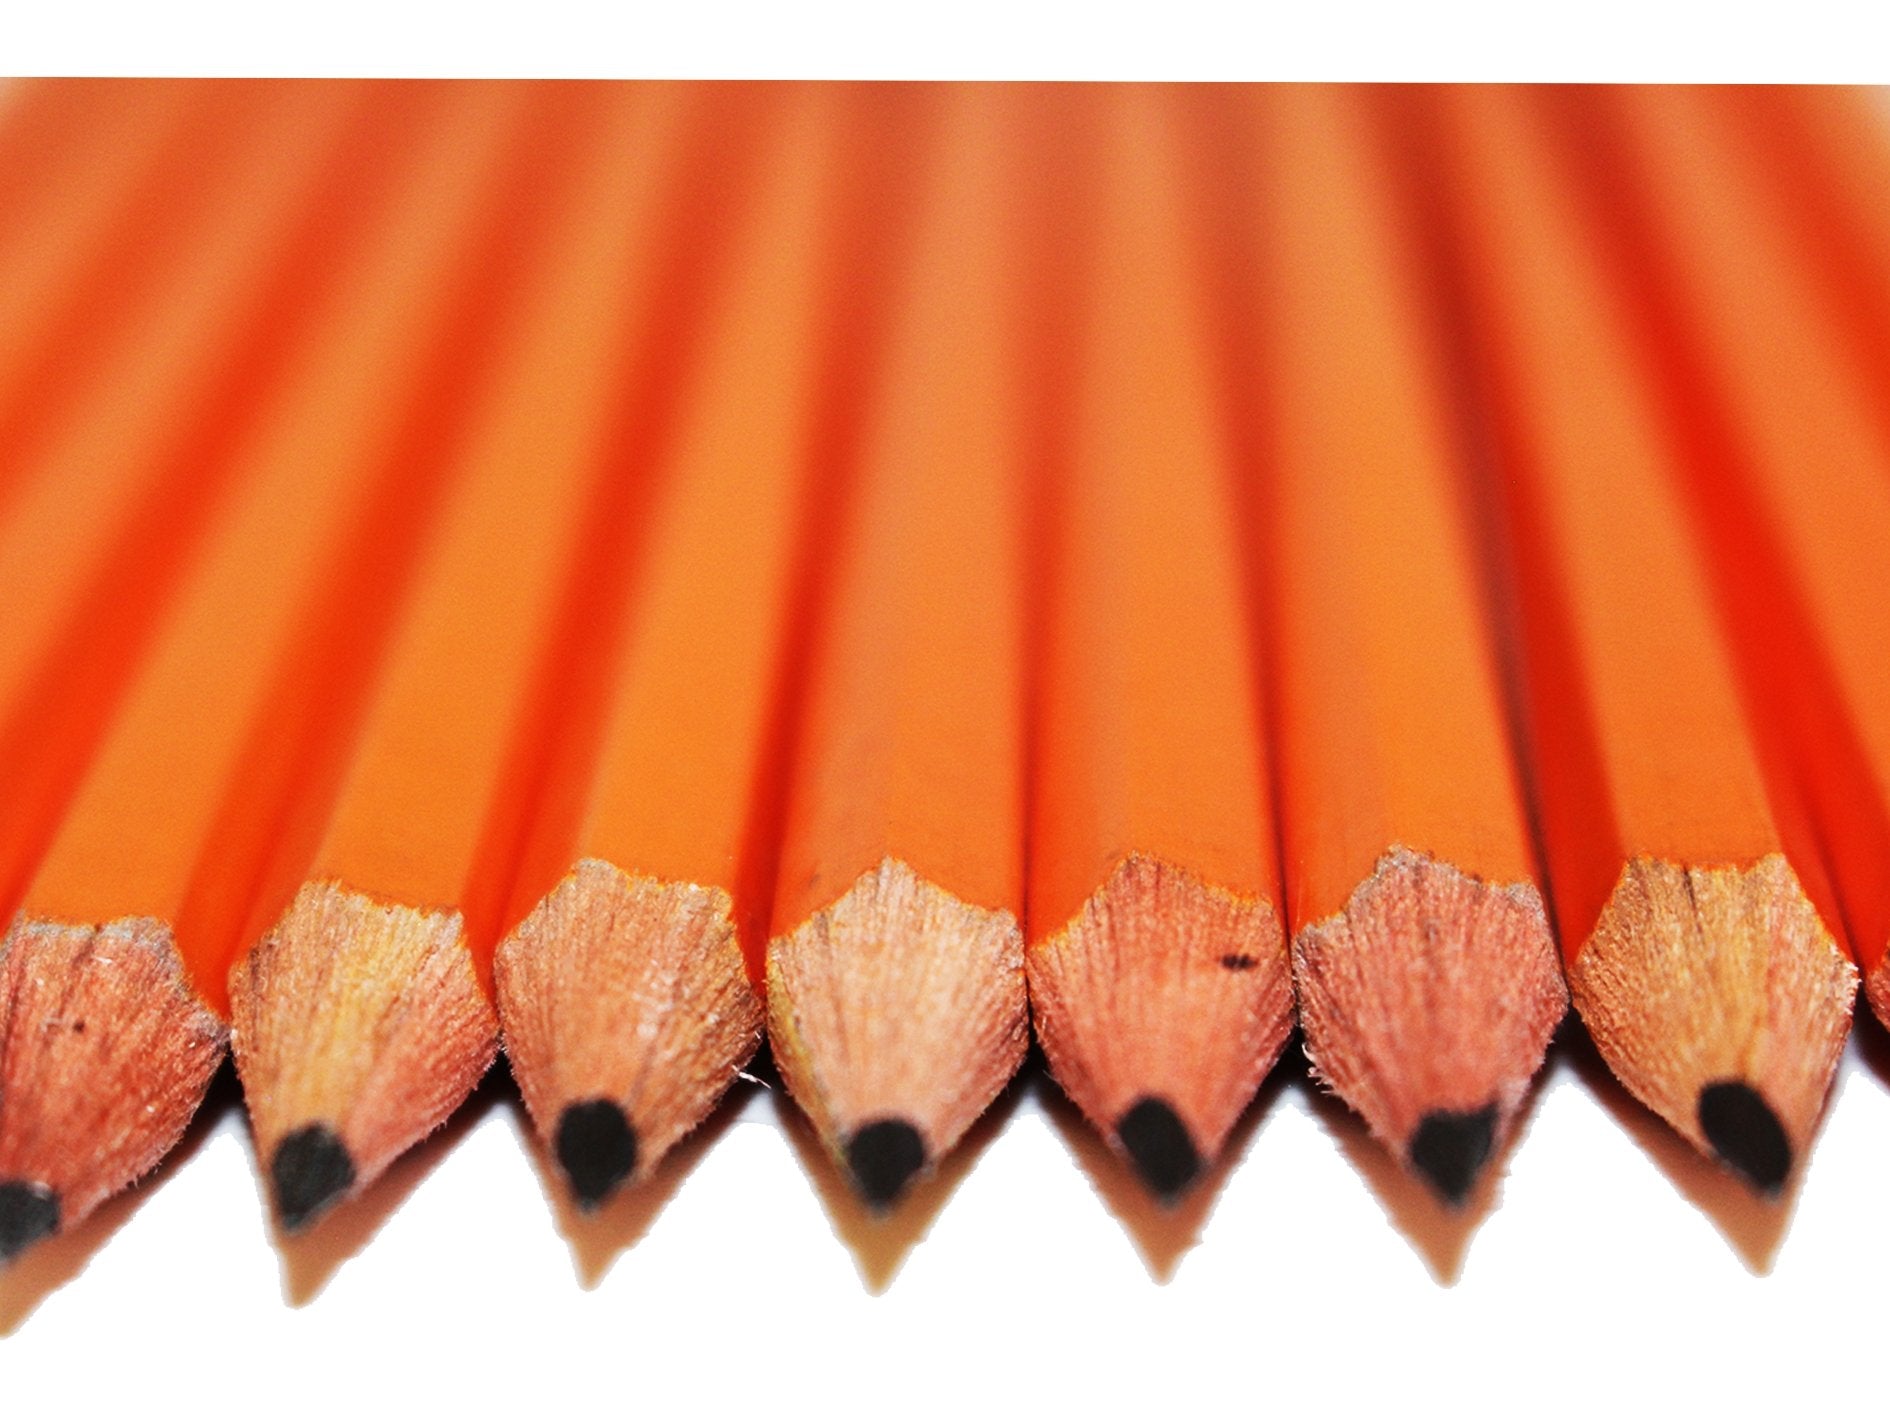 675 DUDLEY HB Pencils Non Eraser - VIR Wholesale